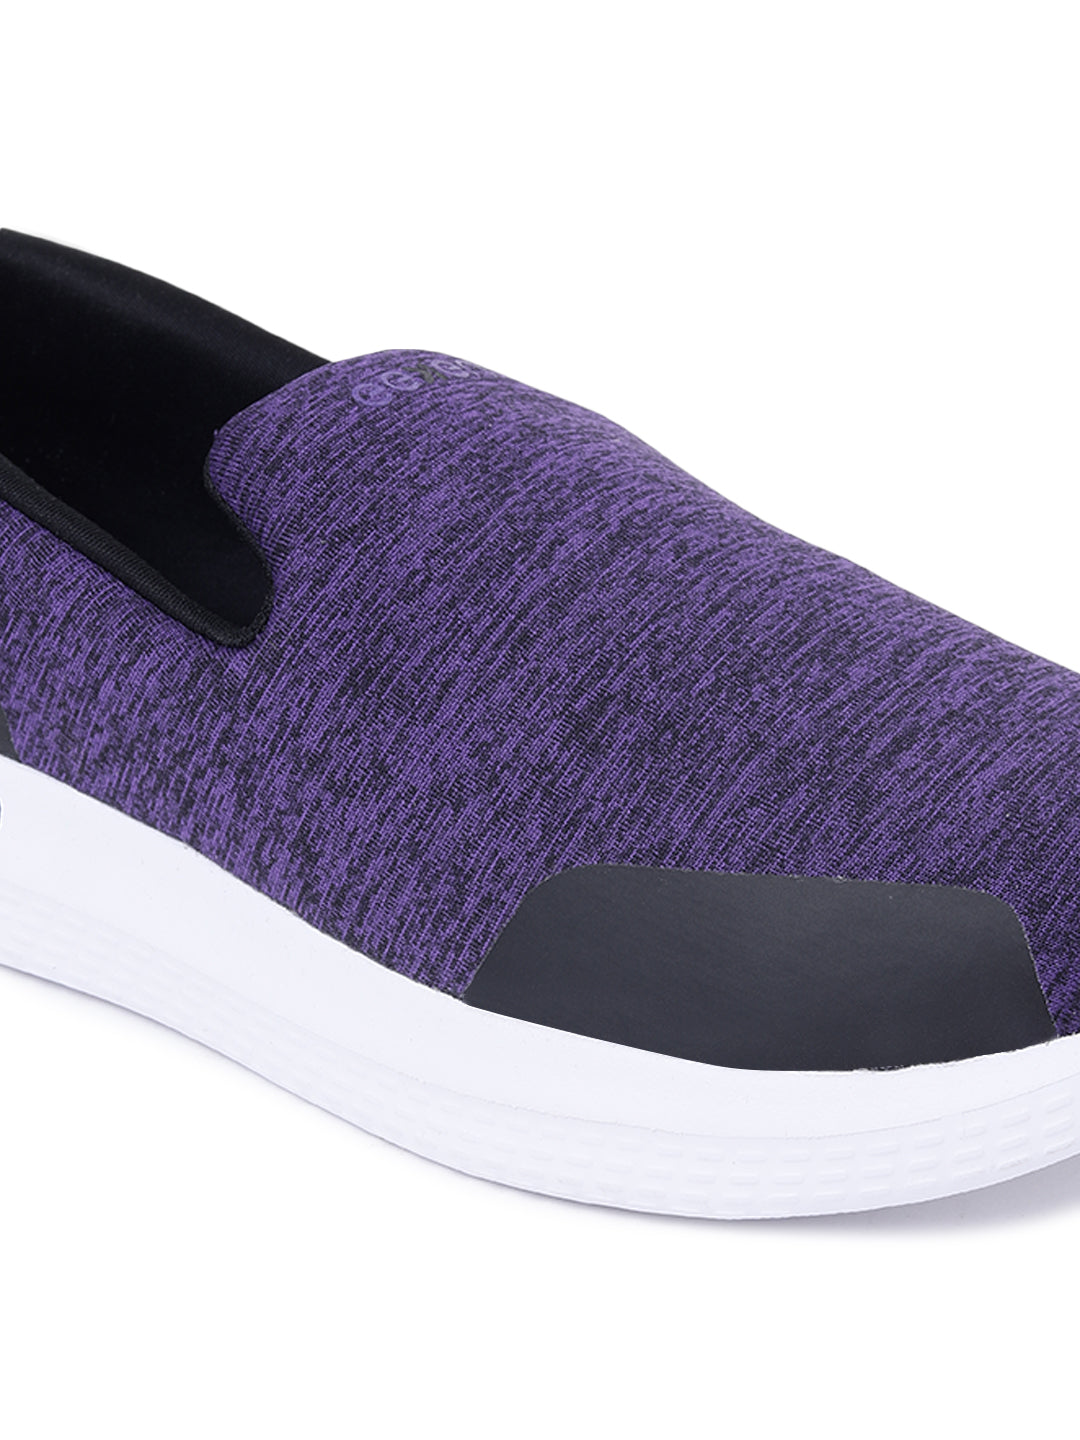 Eeken Lightweight Violet Casual Slip-On Shoes For Women